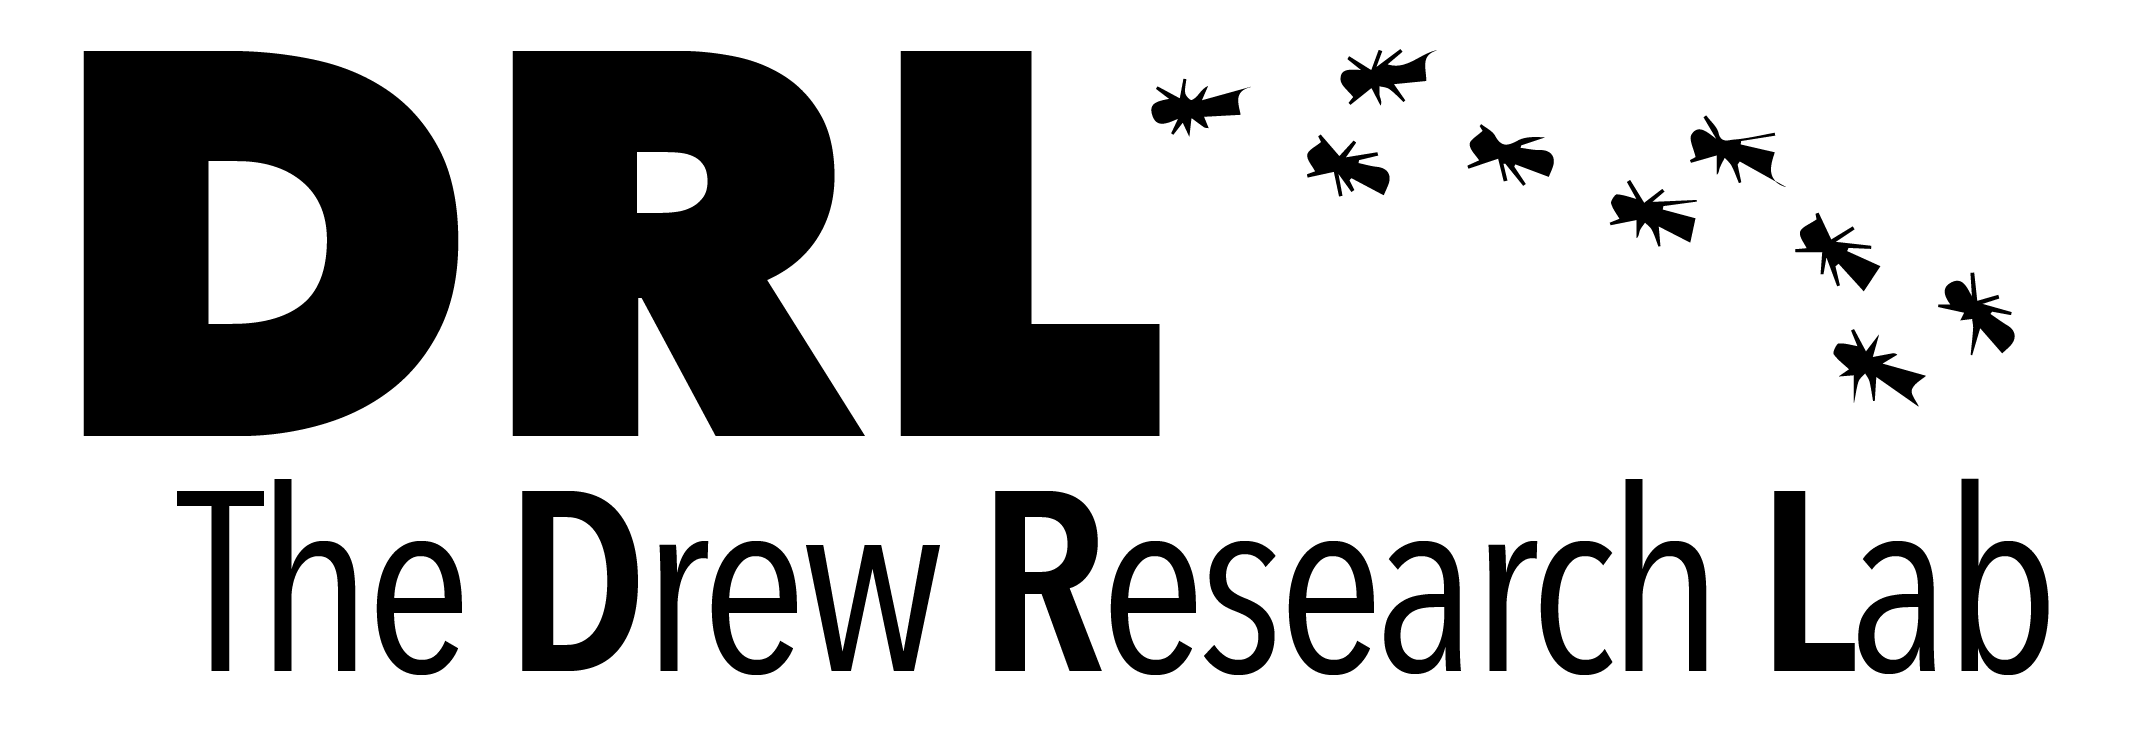 The Drew Research Lab Logo